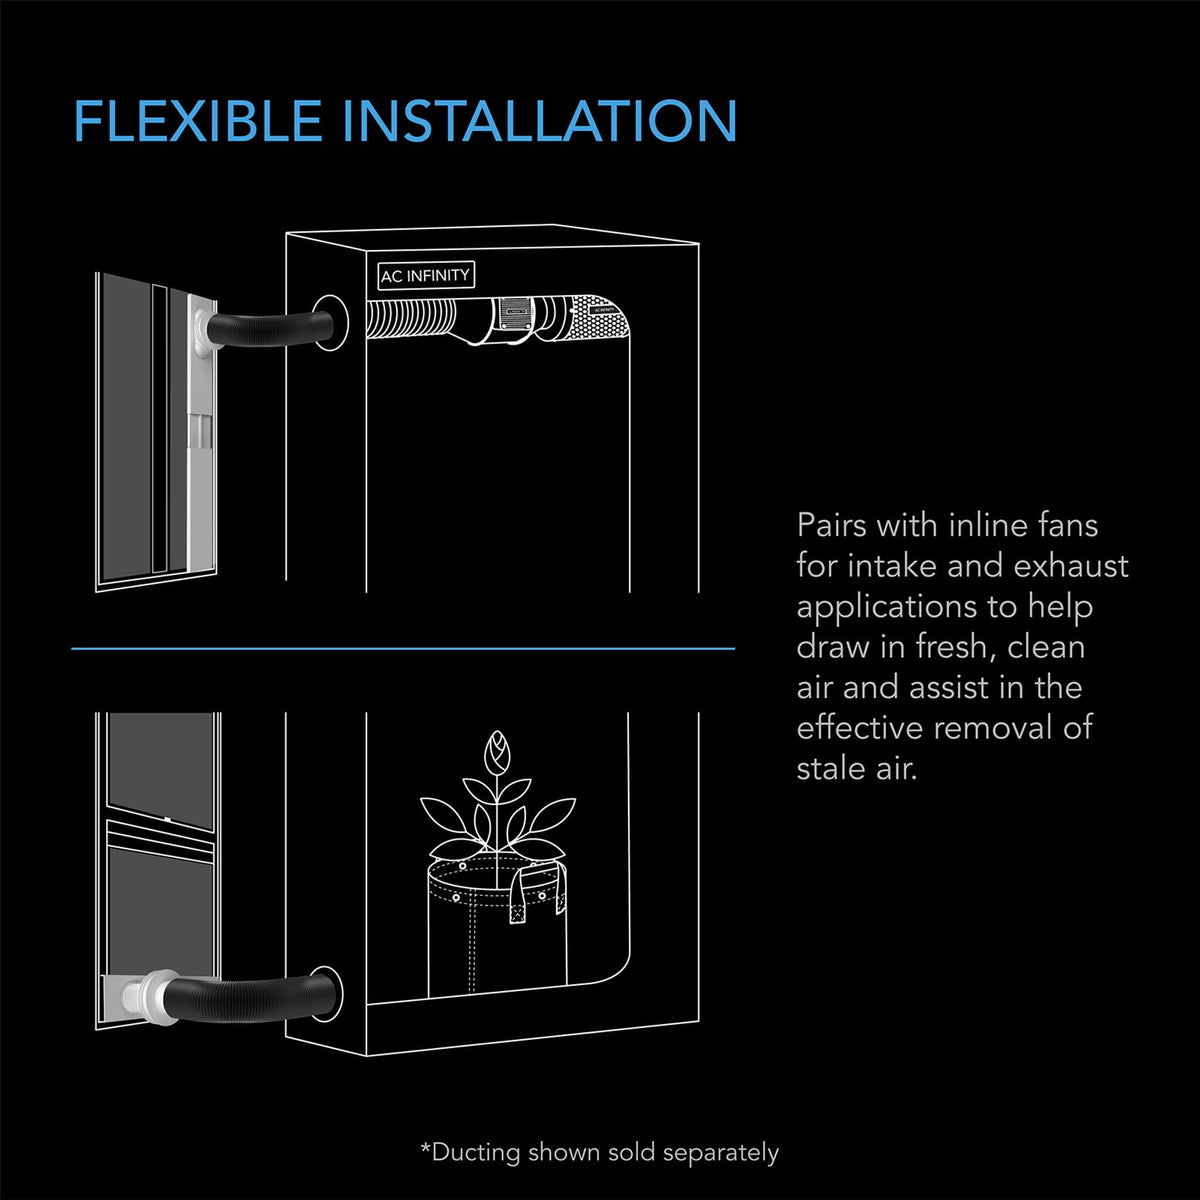 Flexible installation